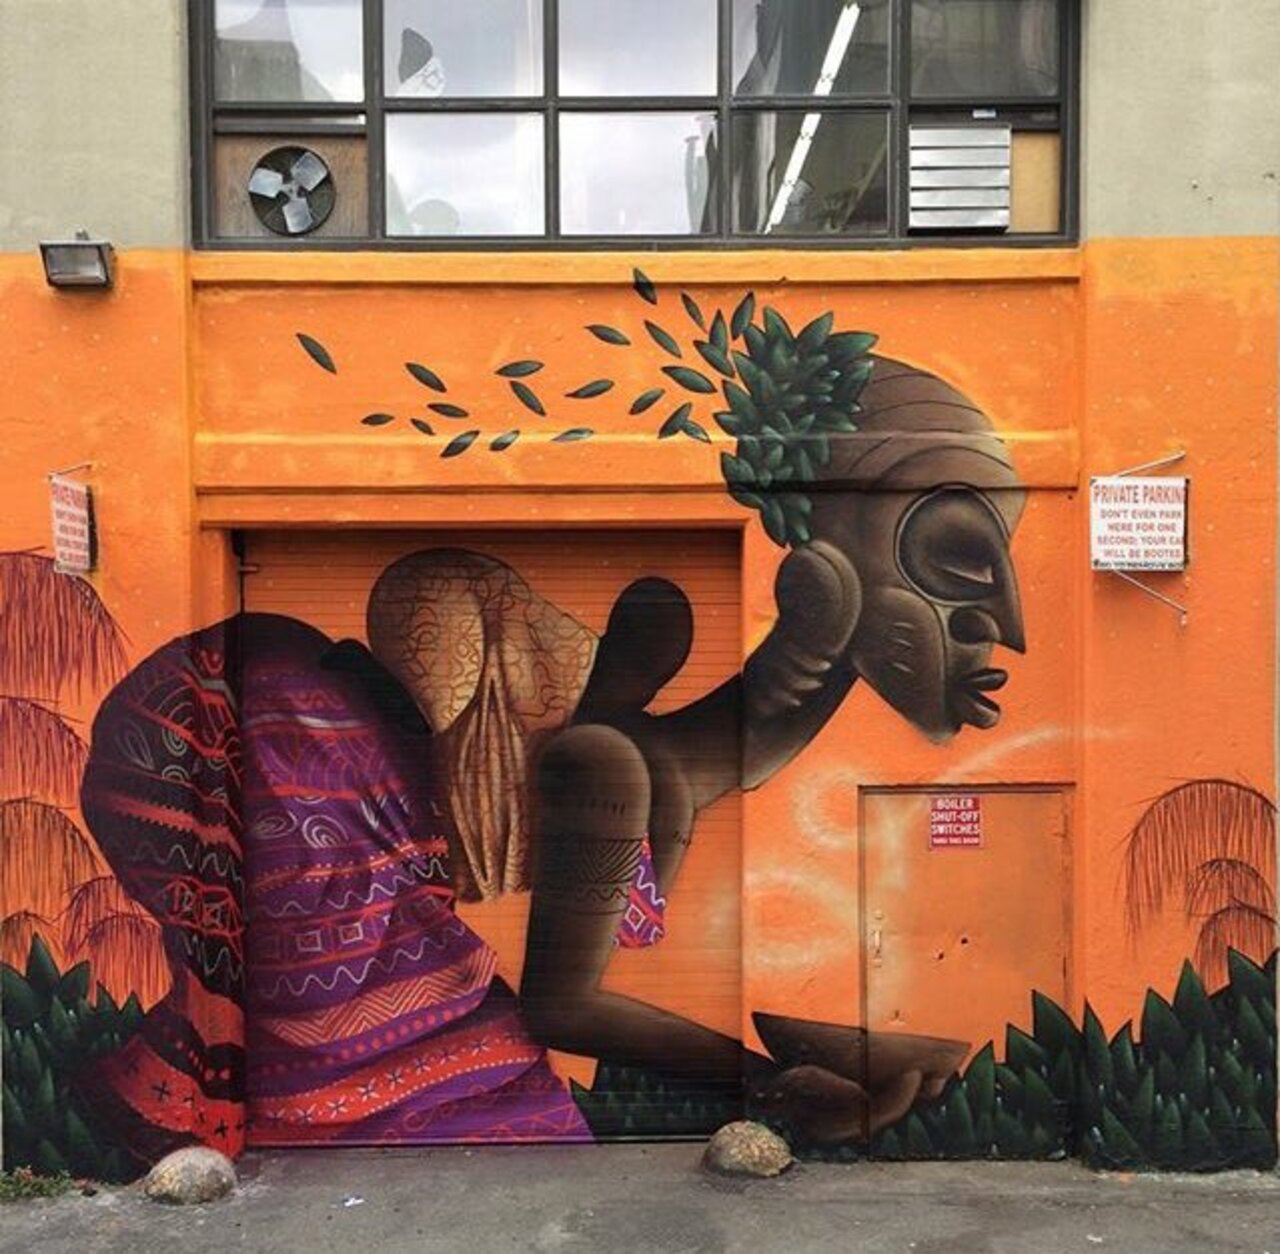 RT @TrinaFlynn: New Street Art by Alexandre Keto in NYC 

#art #graffiti #mural #streetart https://t.co/ashcGtqaJm